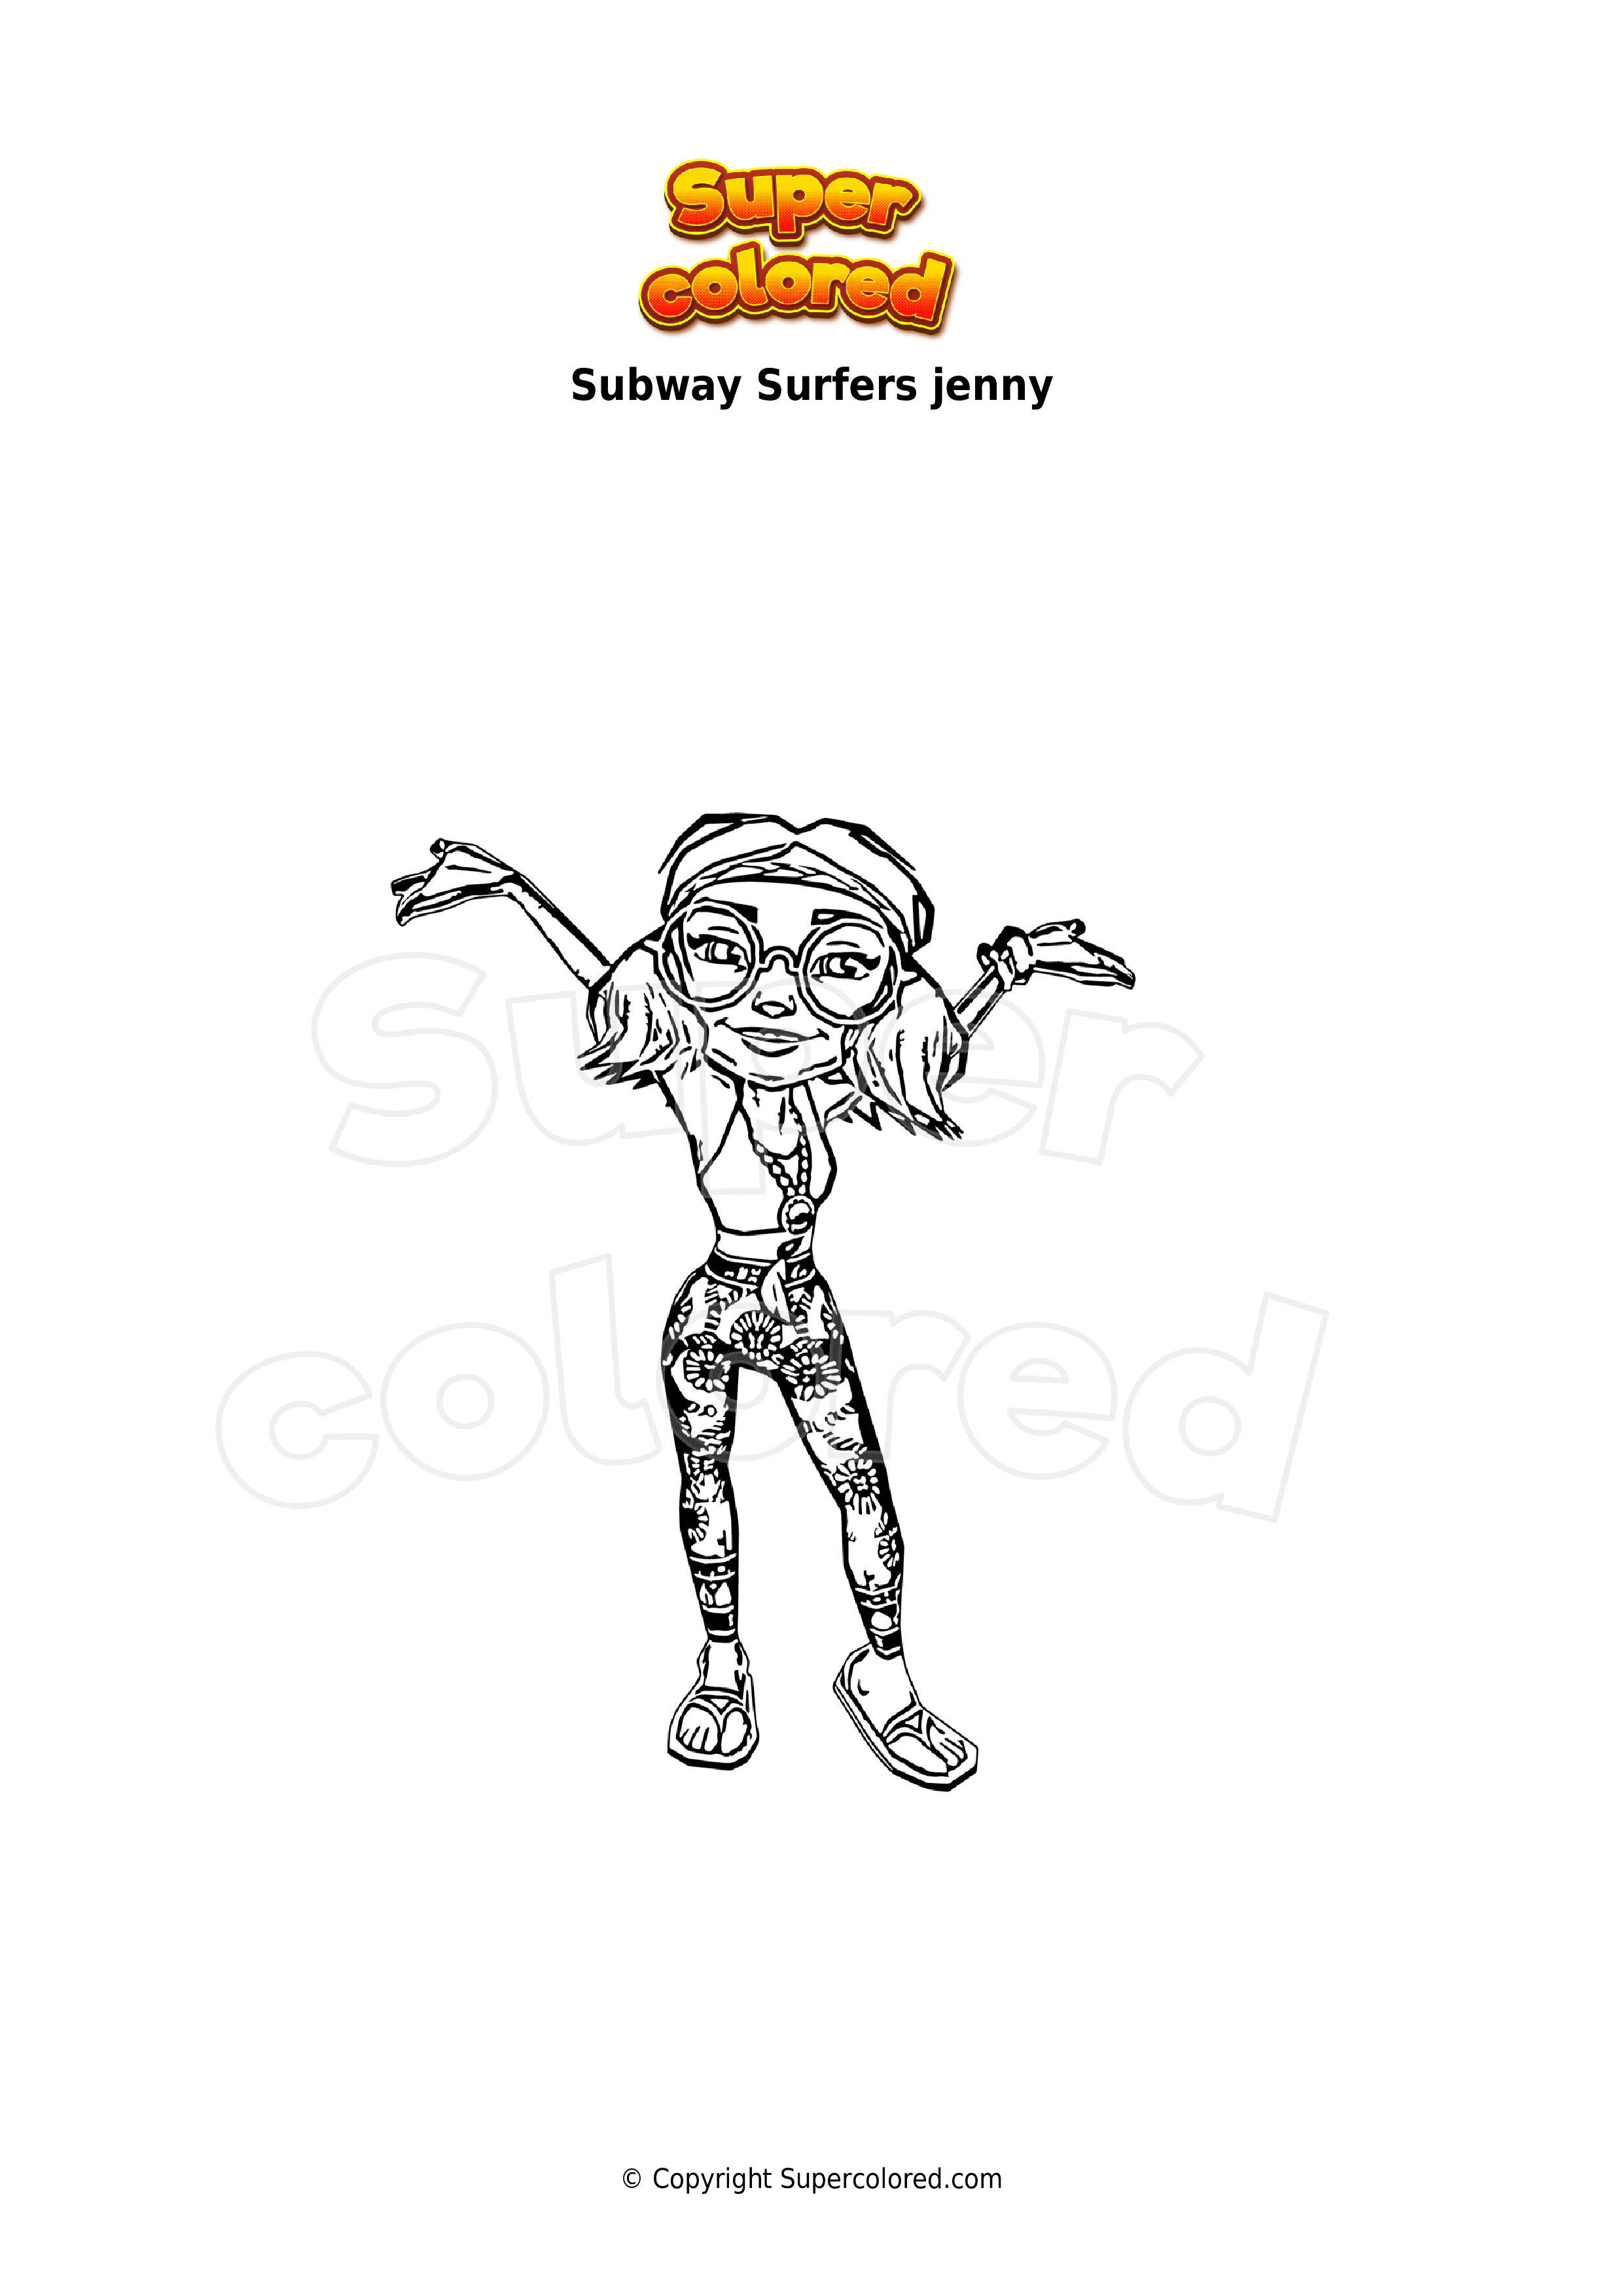 Subway Surfers Versus, Nick VS Jenny